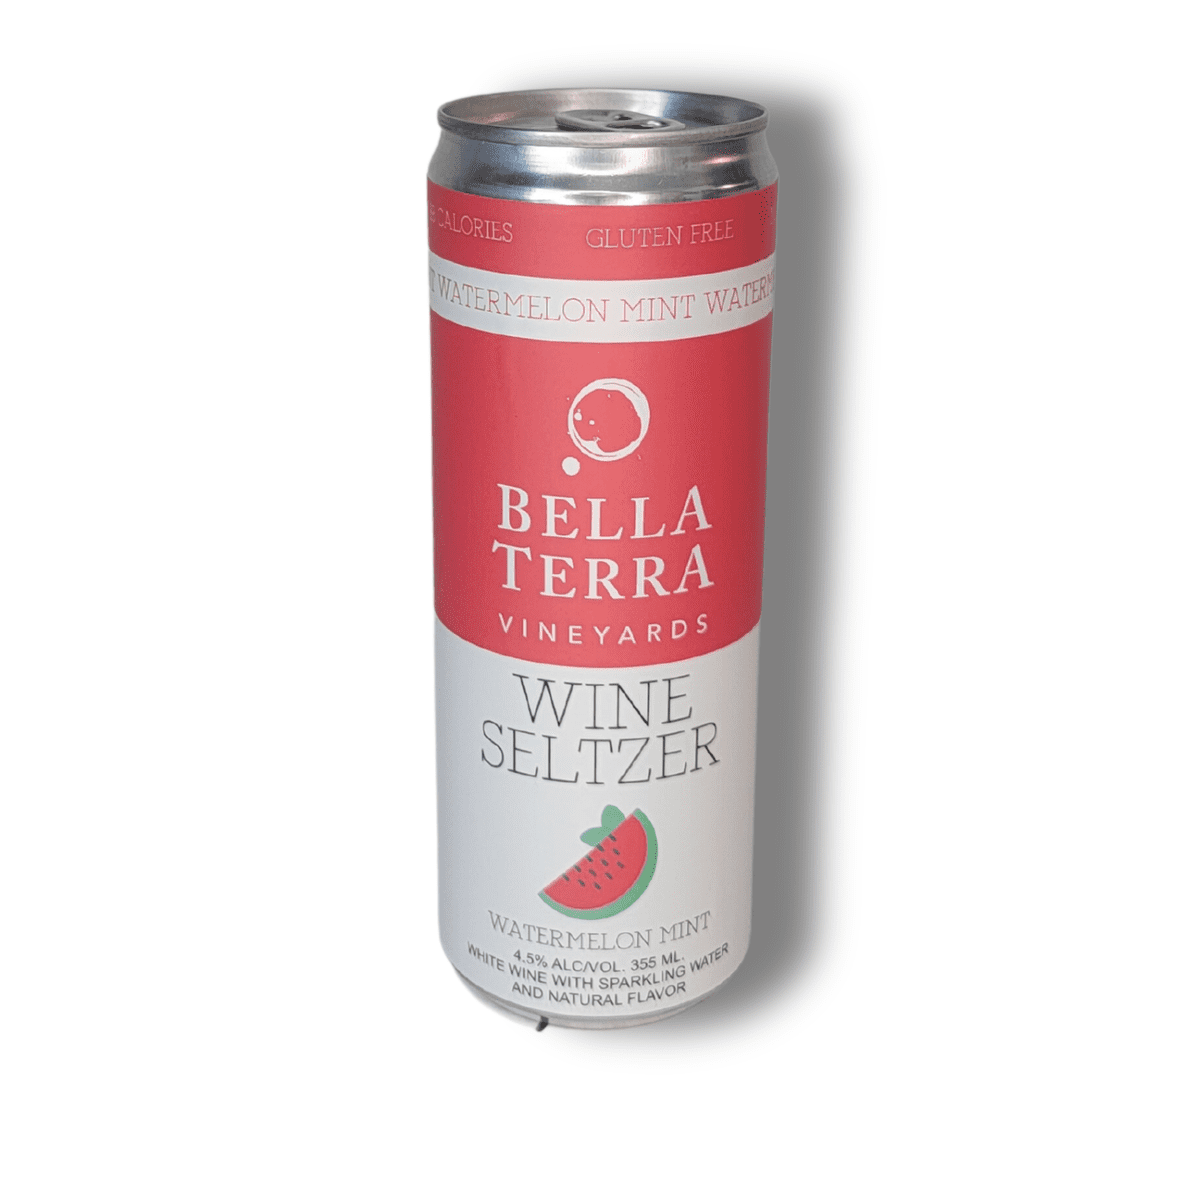 Bella Terra - Watermelon Mint 4-Pack - 12oz Sleek Cans